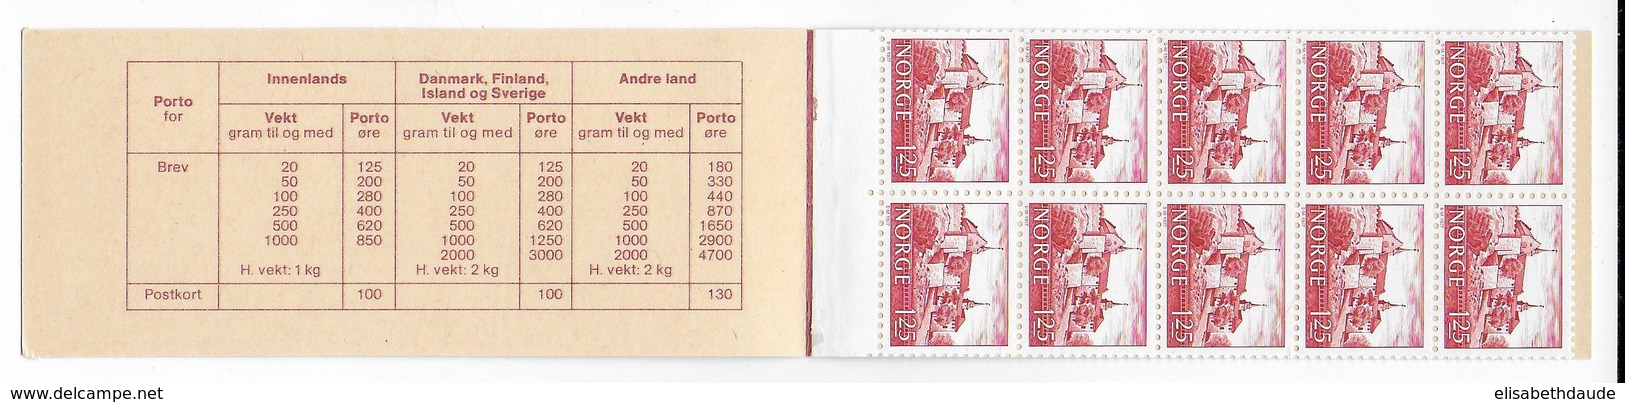 NORVEGE - 1977 - CARNET USAGE COURANT  **/MNH - - Machine Labels [ATM]